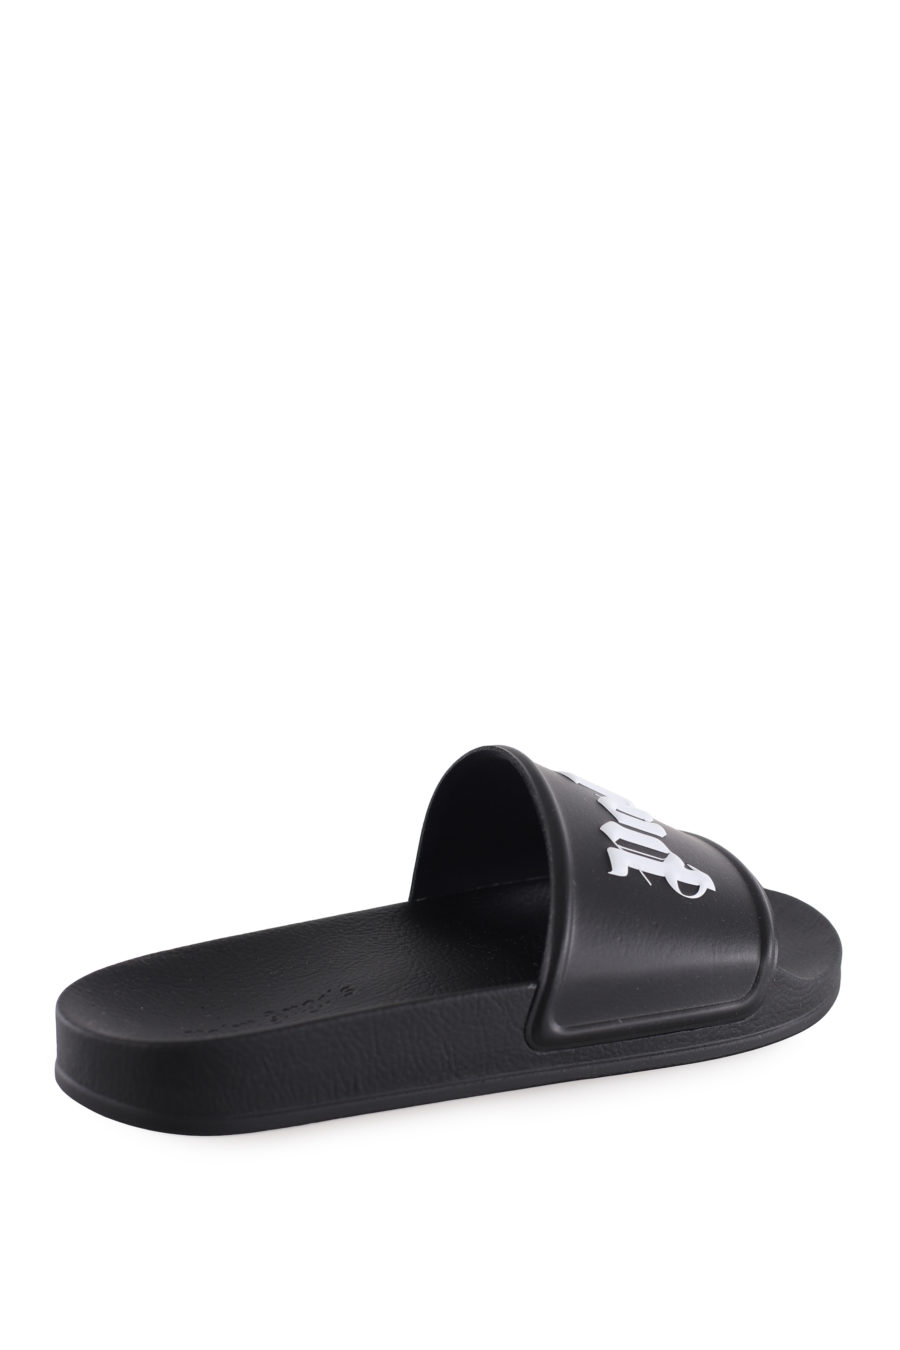 Sliders negras con logo blanco - IMG 7367